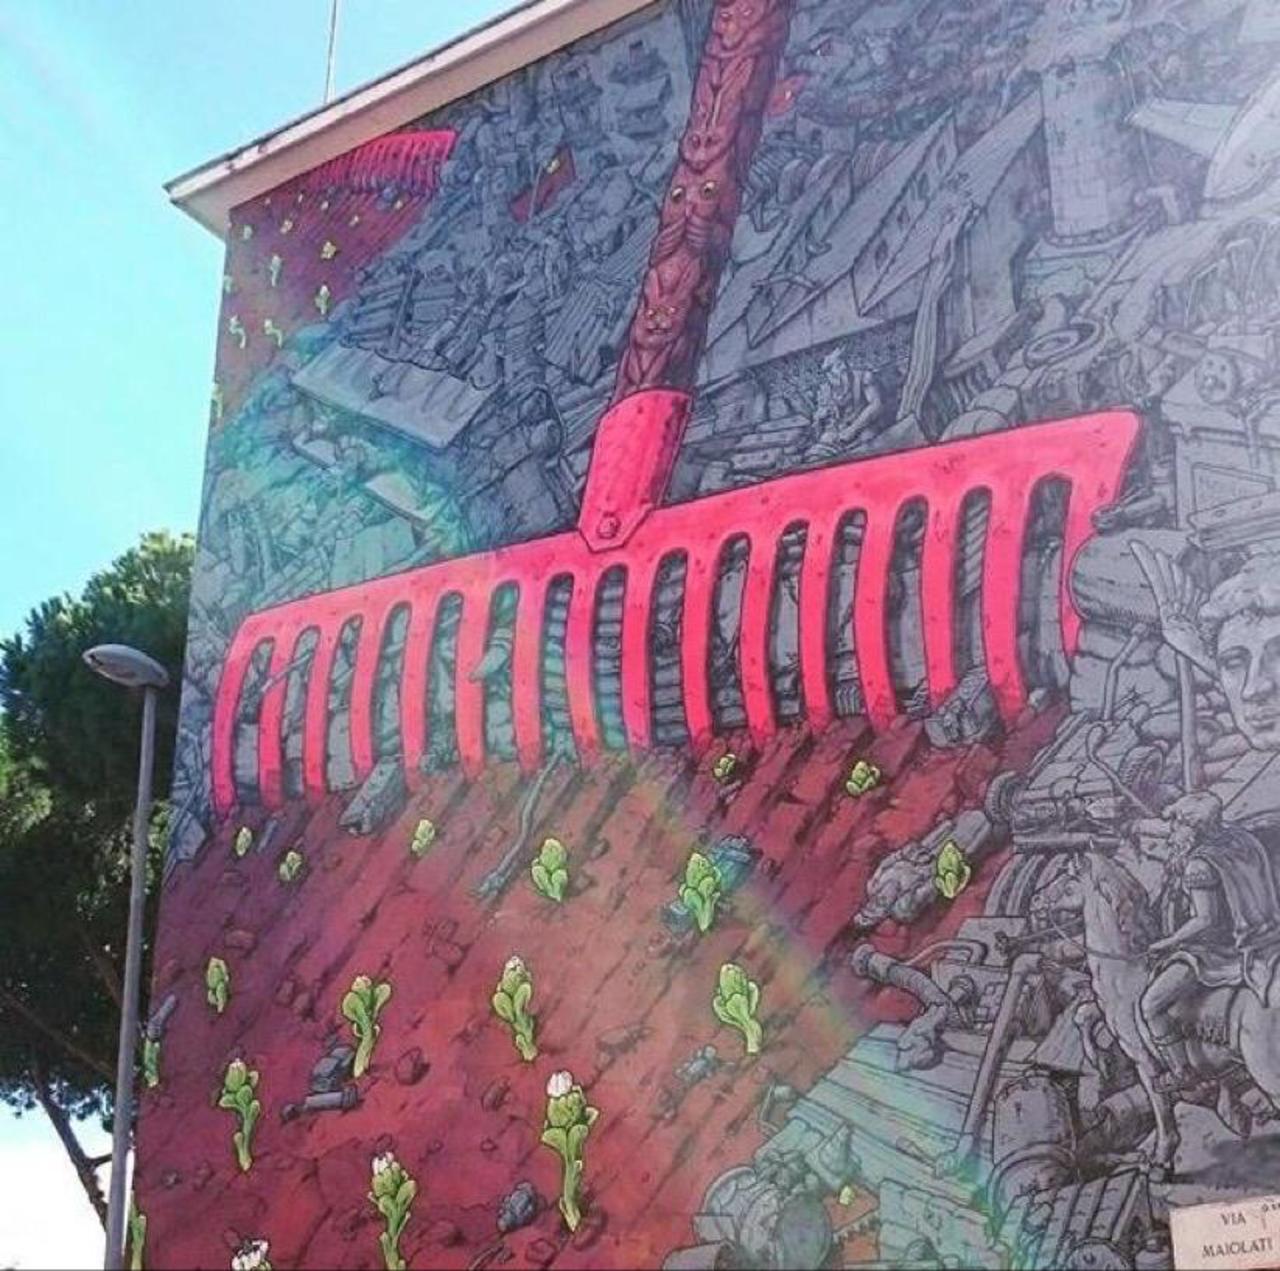 RT @AuKeats: #switch #graffiti #streetart in #rome #art #arte http://t.co/MkZdokKjqz